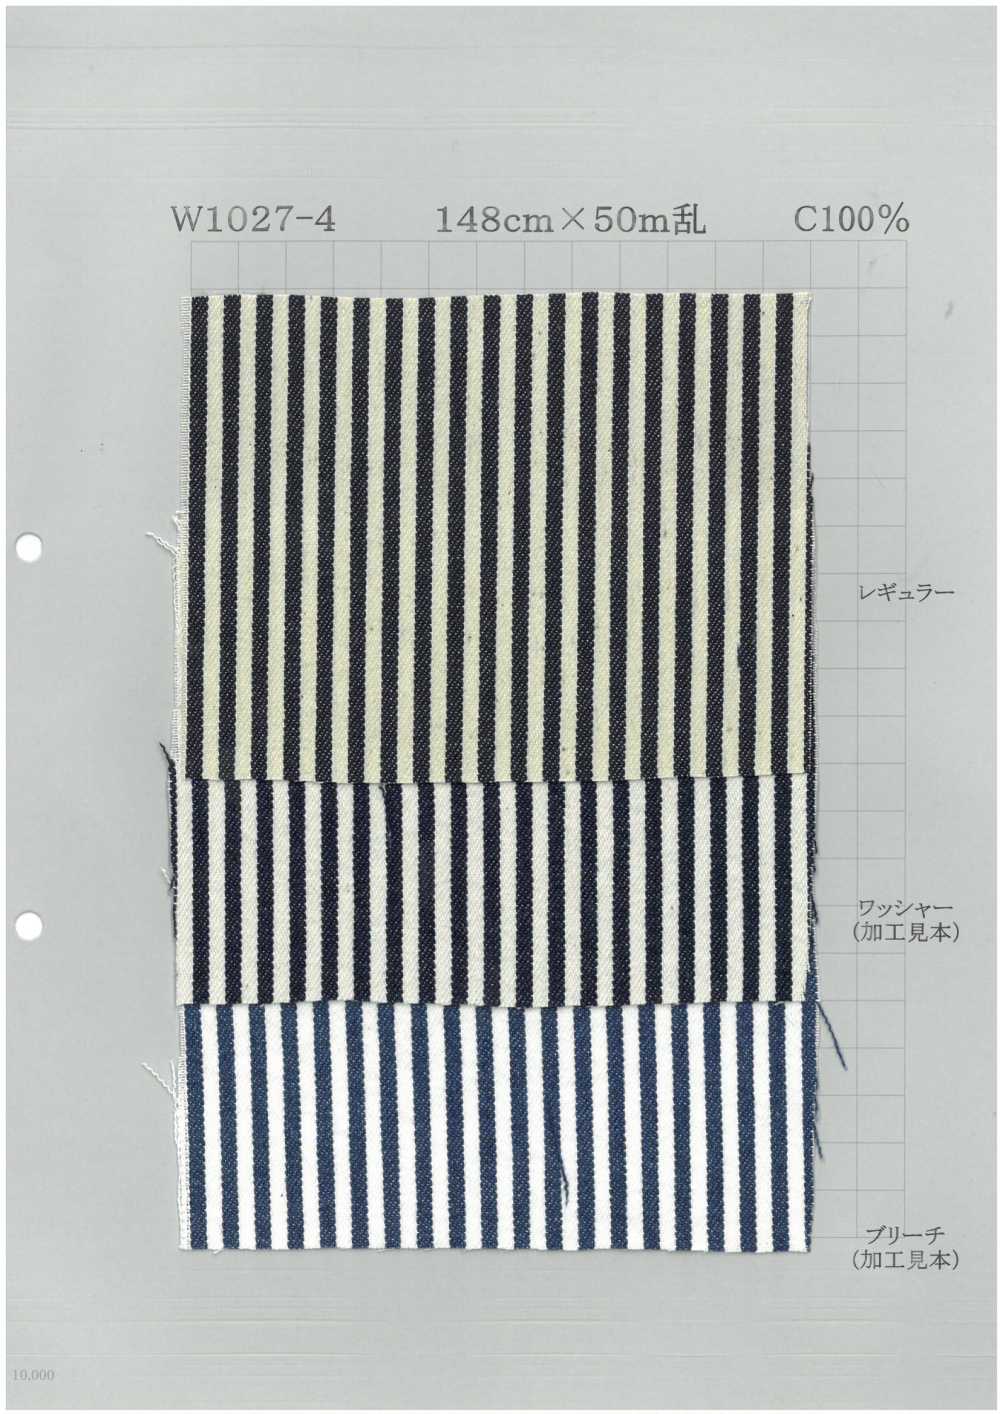 W1027-4 Cotton Bold Stripe Denim[Textile / Fabric] Yoshiwa Textile